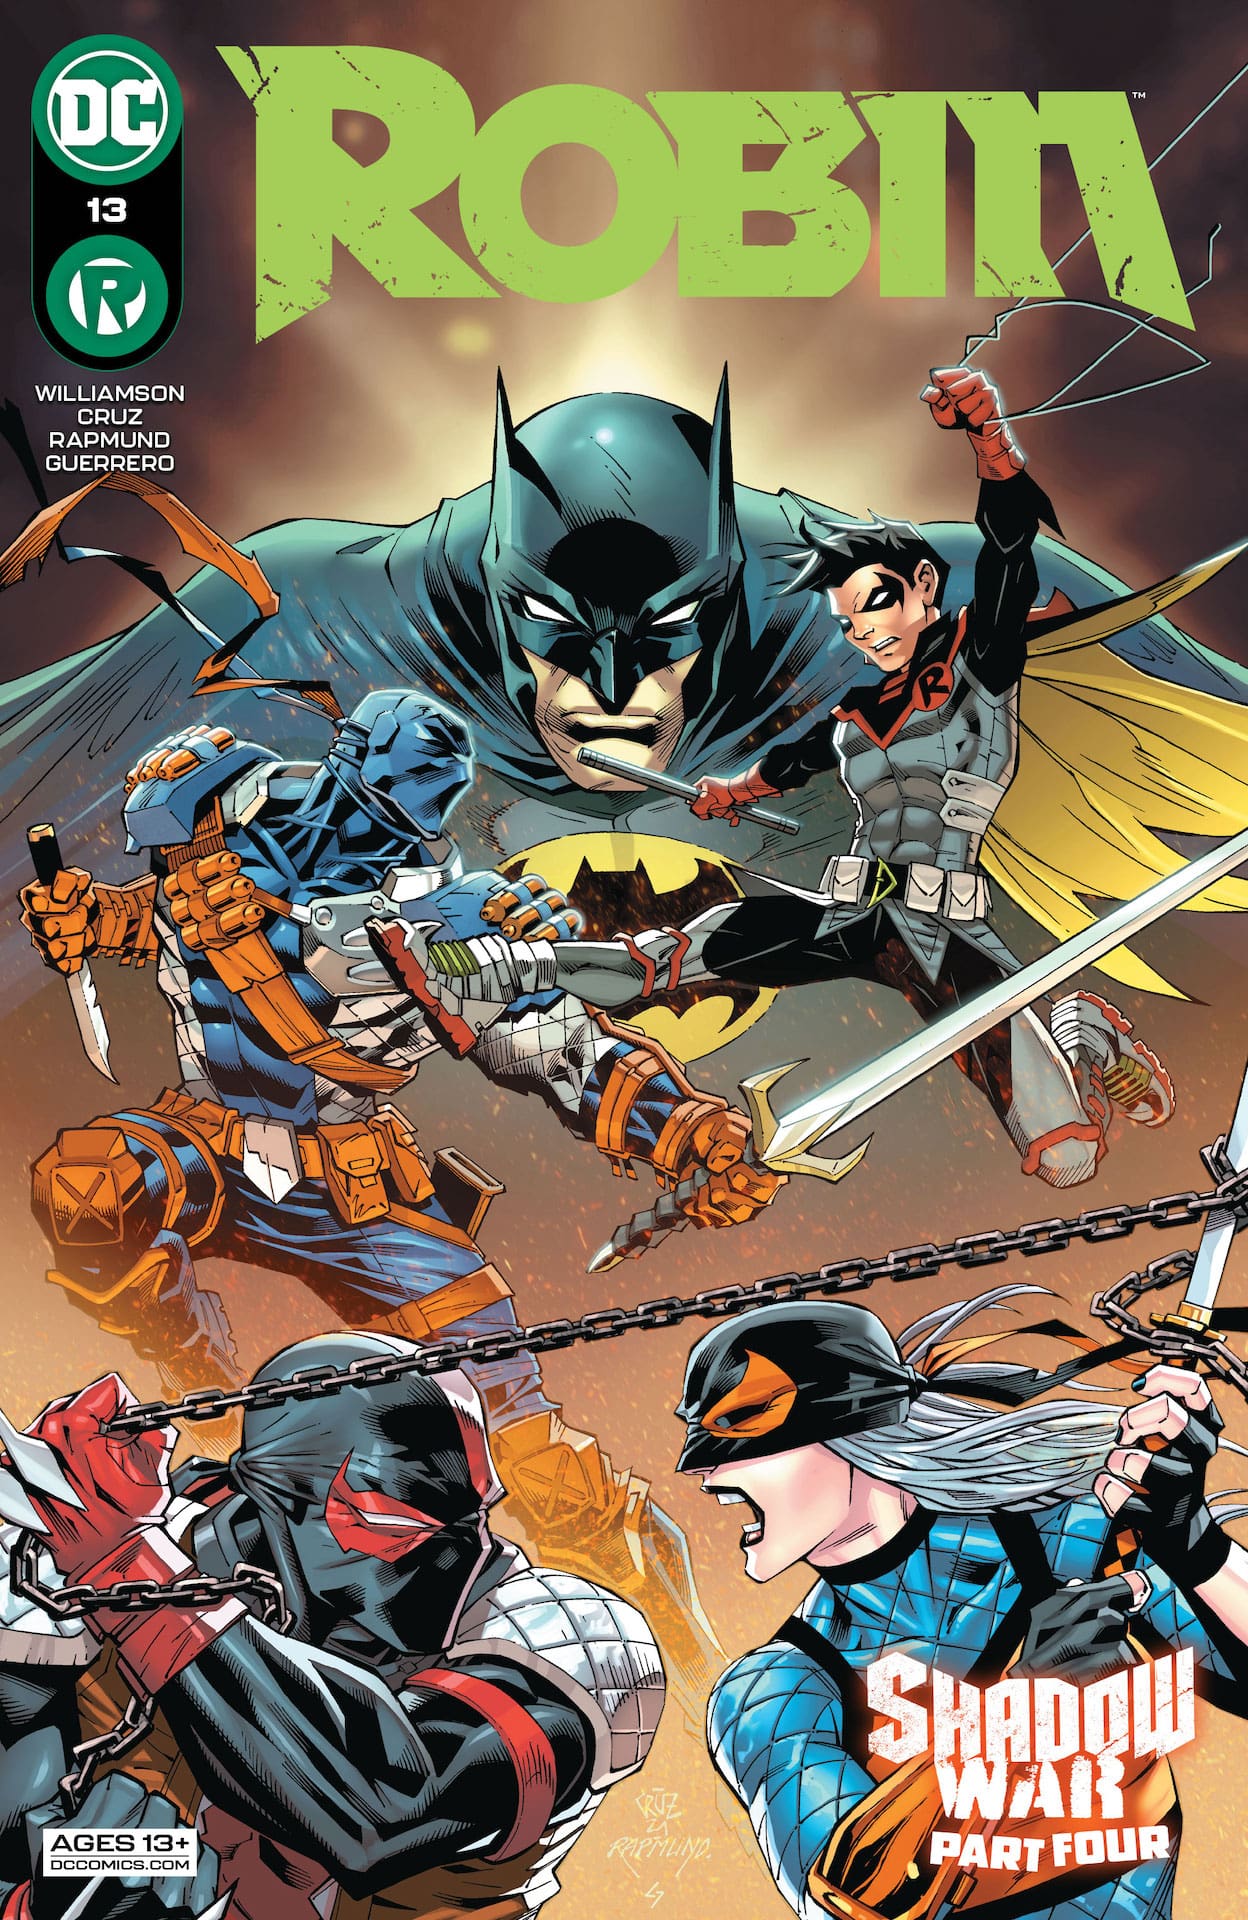 DC Preview: Robin #13